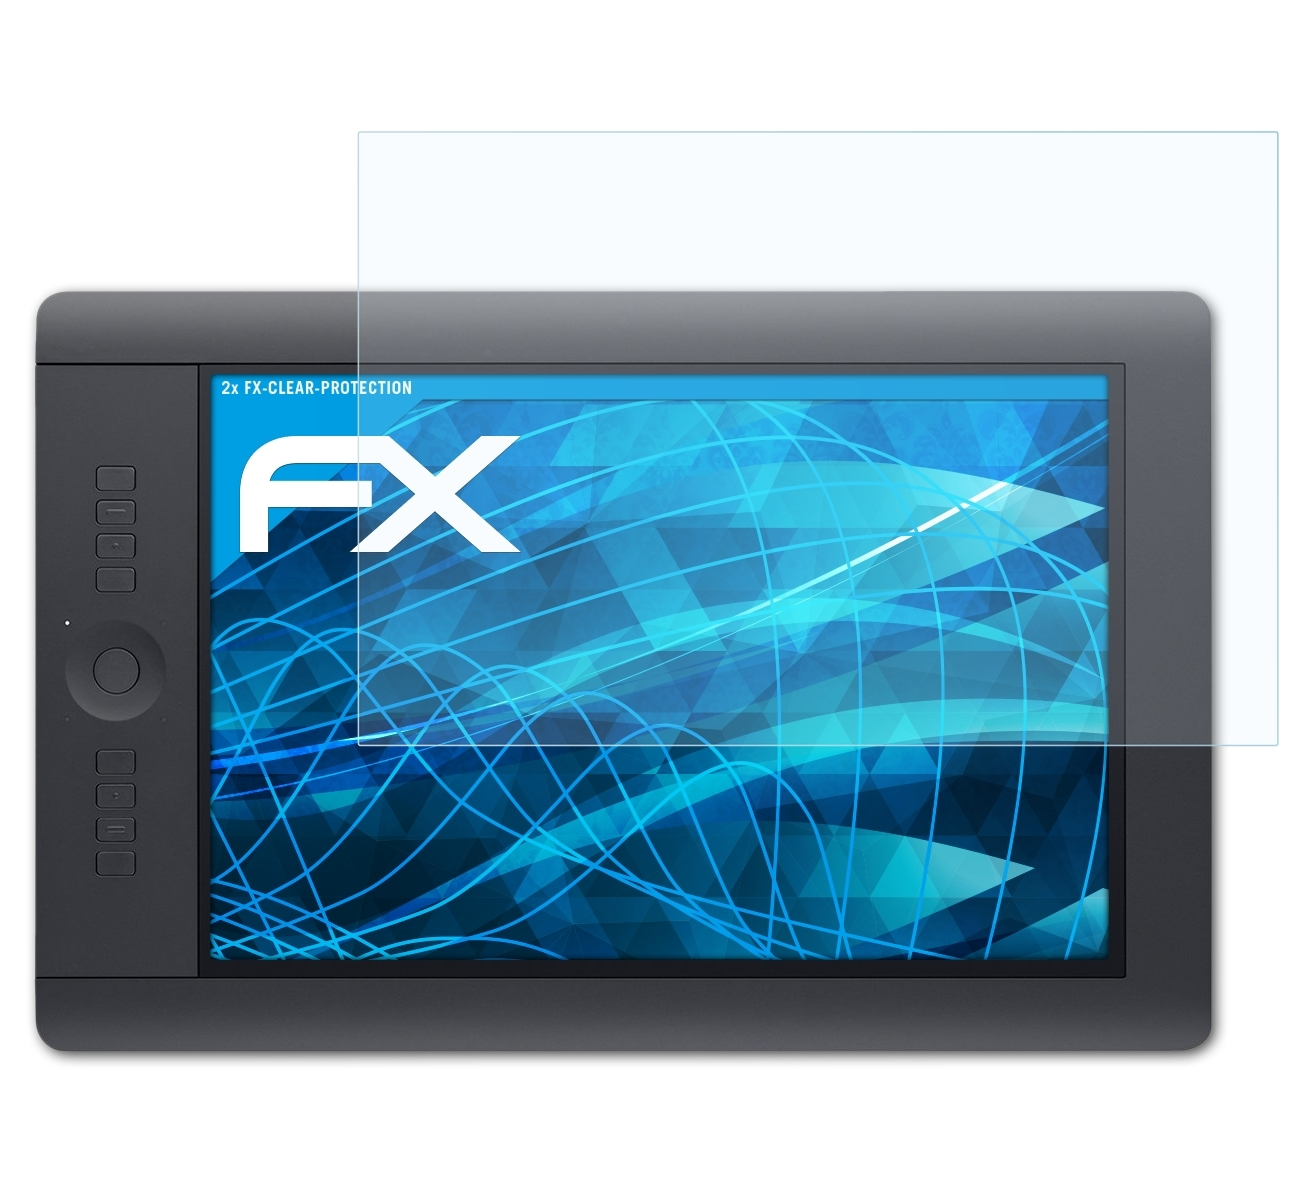 ATFOLIX 2x FX-Clear Displayschutz(für INTUOS5 touch Wacom Large)